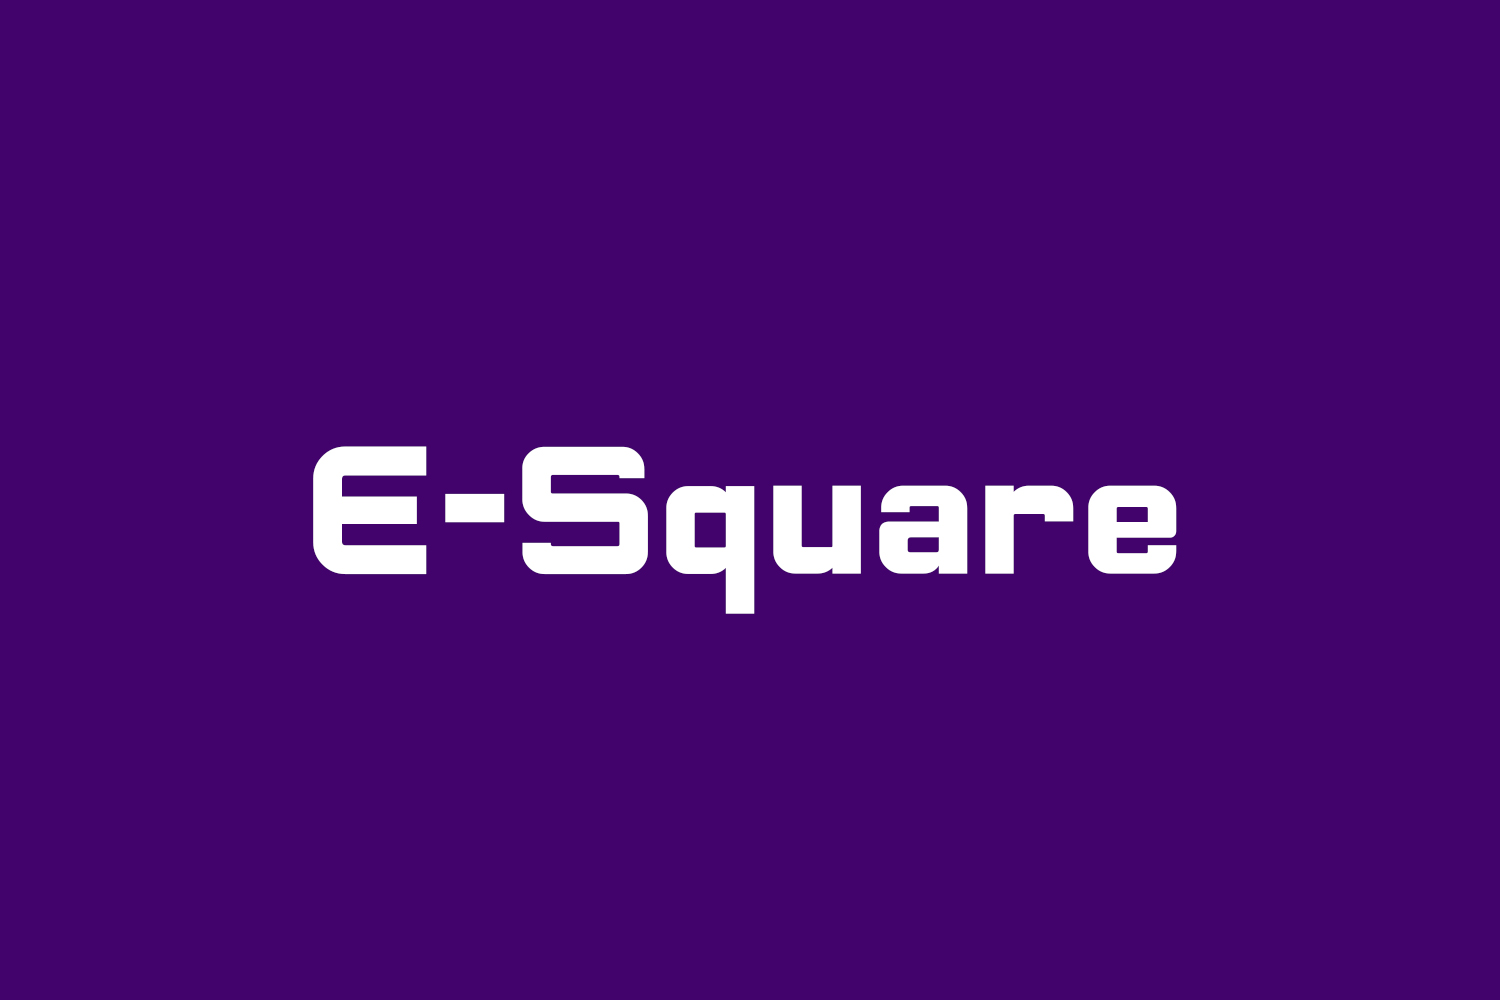 E-Square Free Font